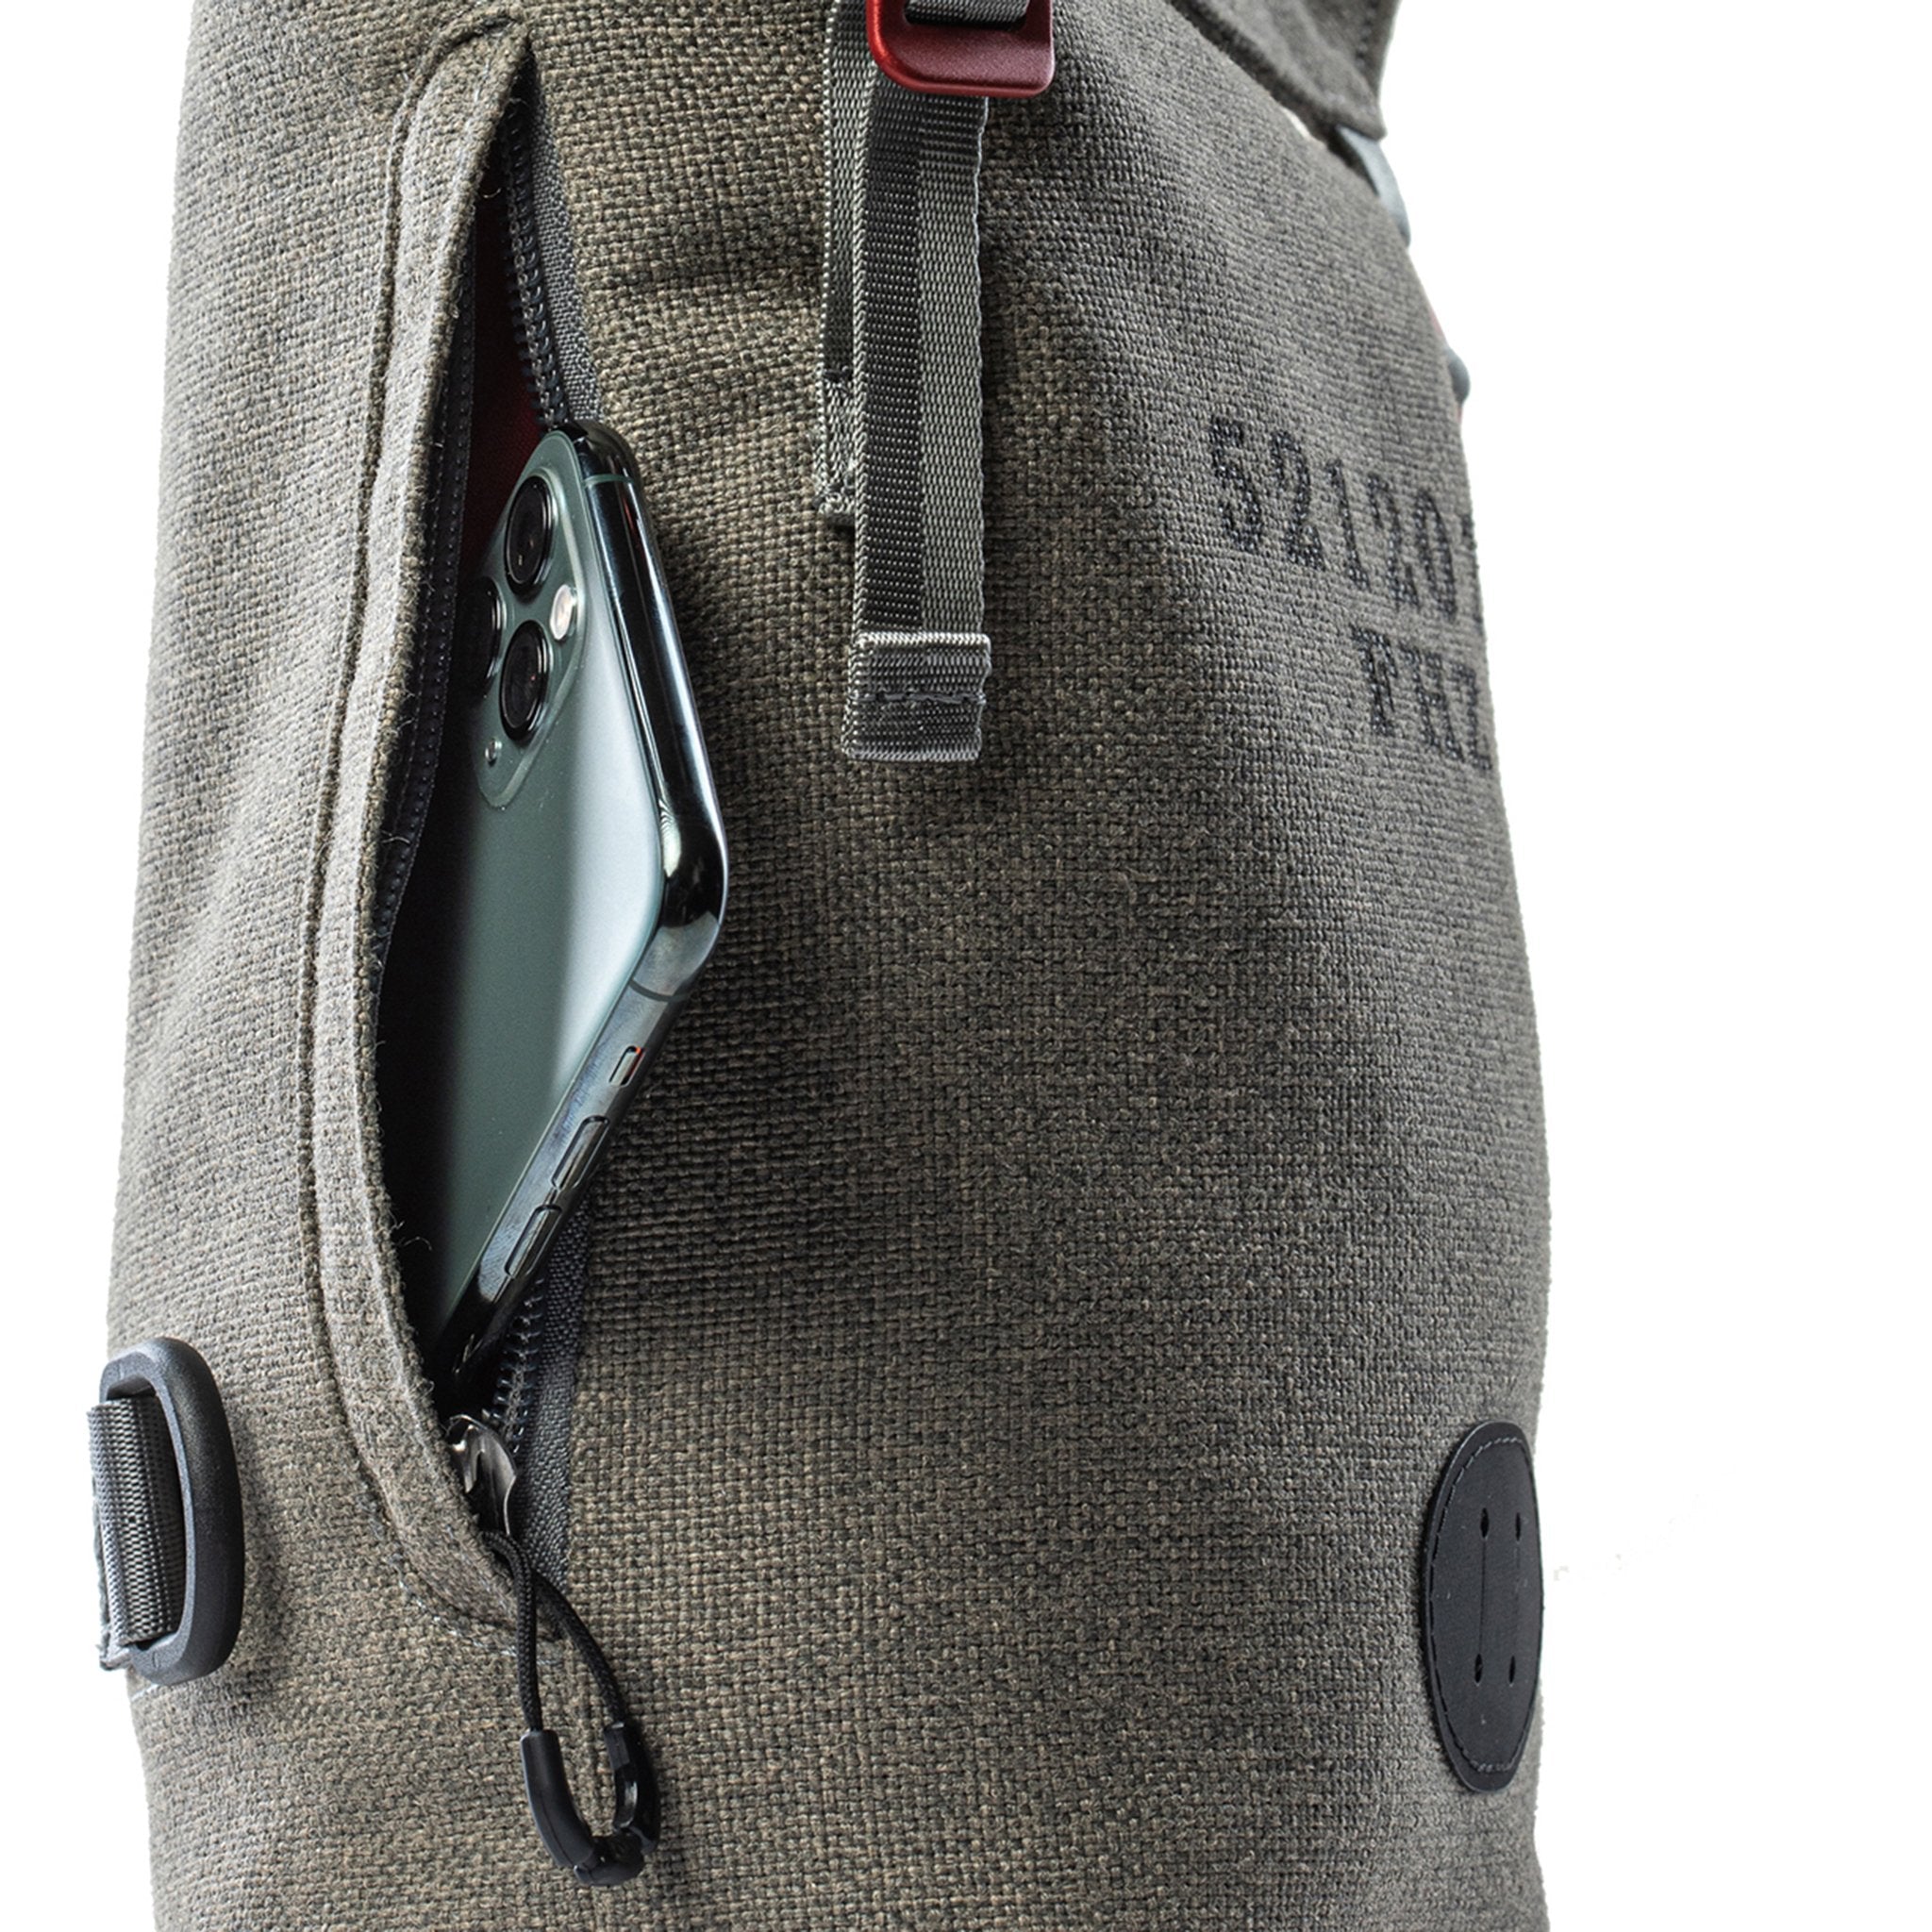 Buy URBAN TRIBE Smart Shell Laptop Bag 15.6 inch | Office Bag for Men &  Women | Laptop Sleeve Bag with Shoulder Strap | Indigo at Amazon.in